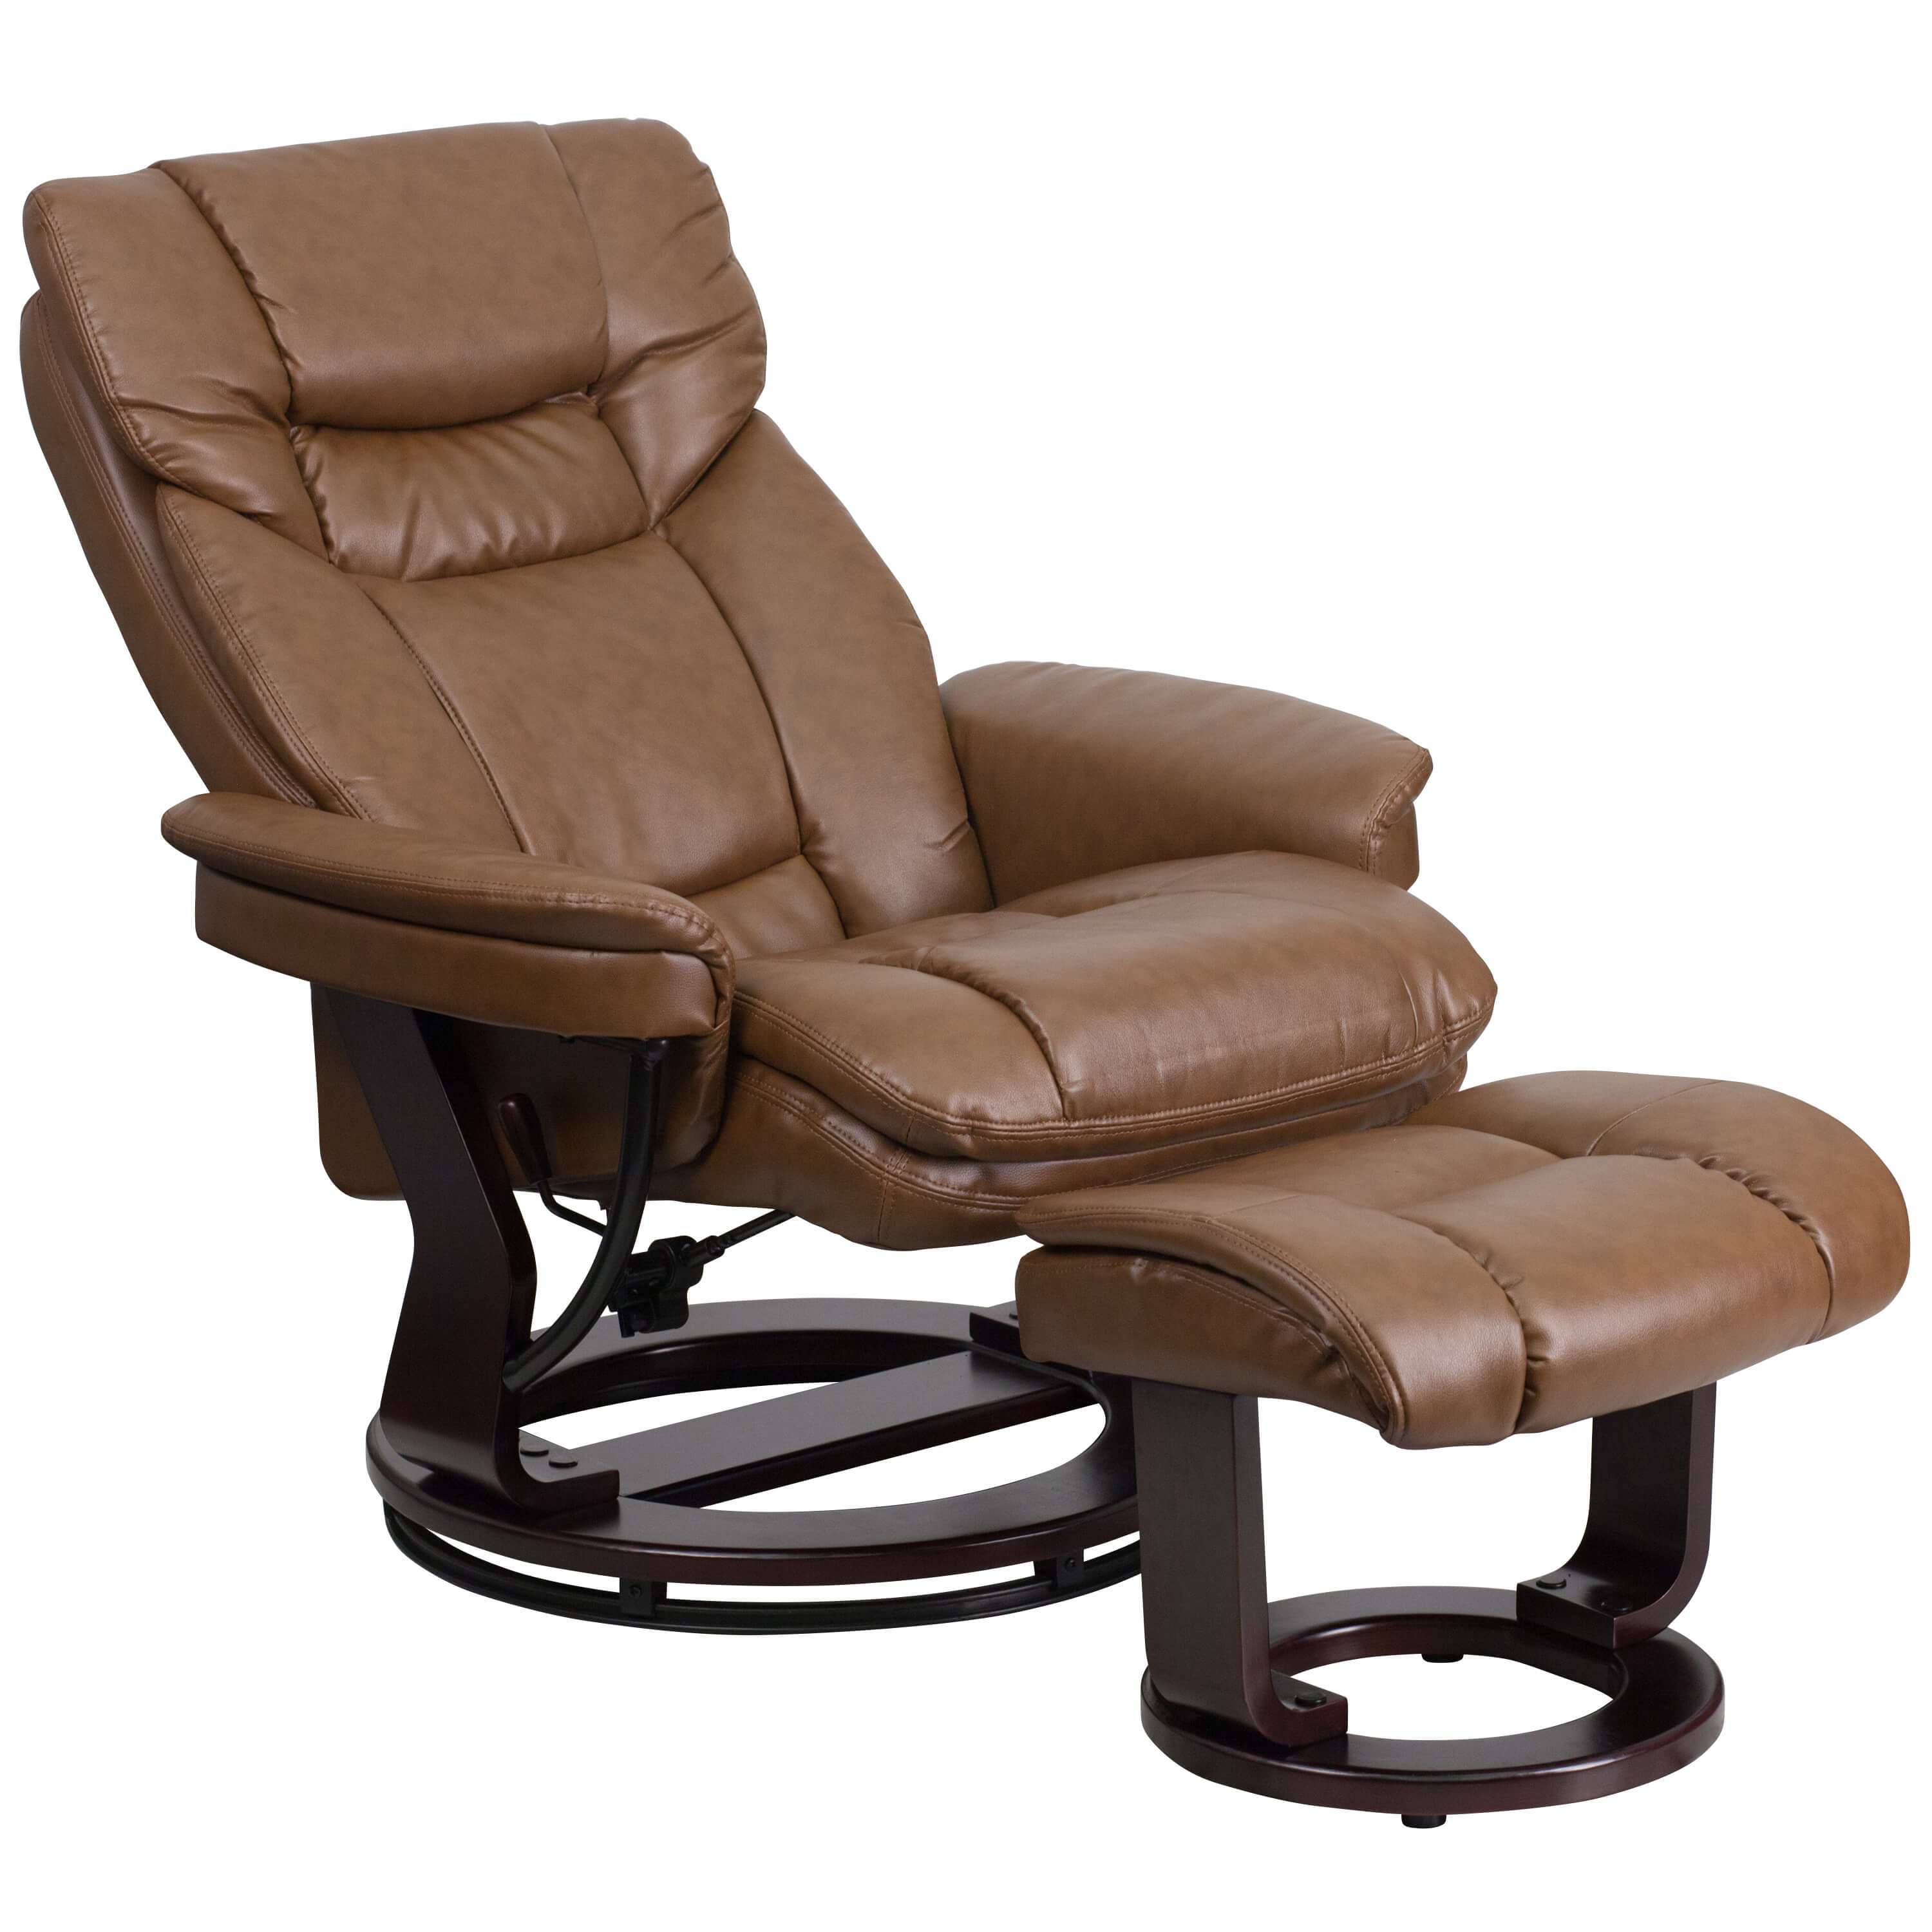 Reclining armchair reclined view